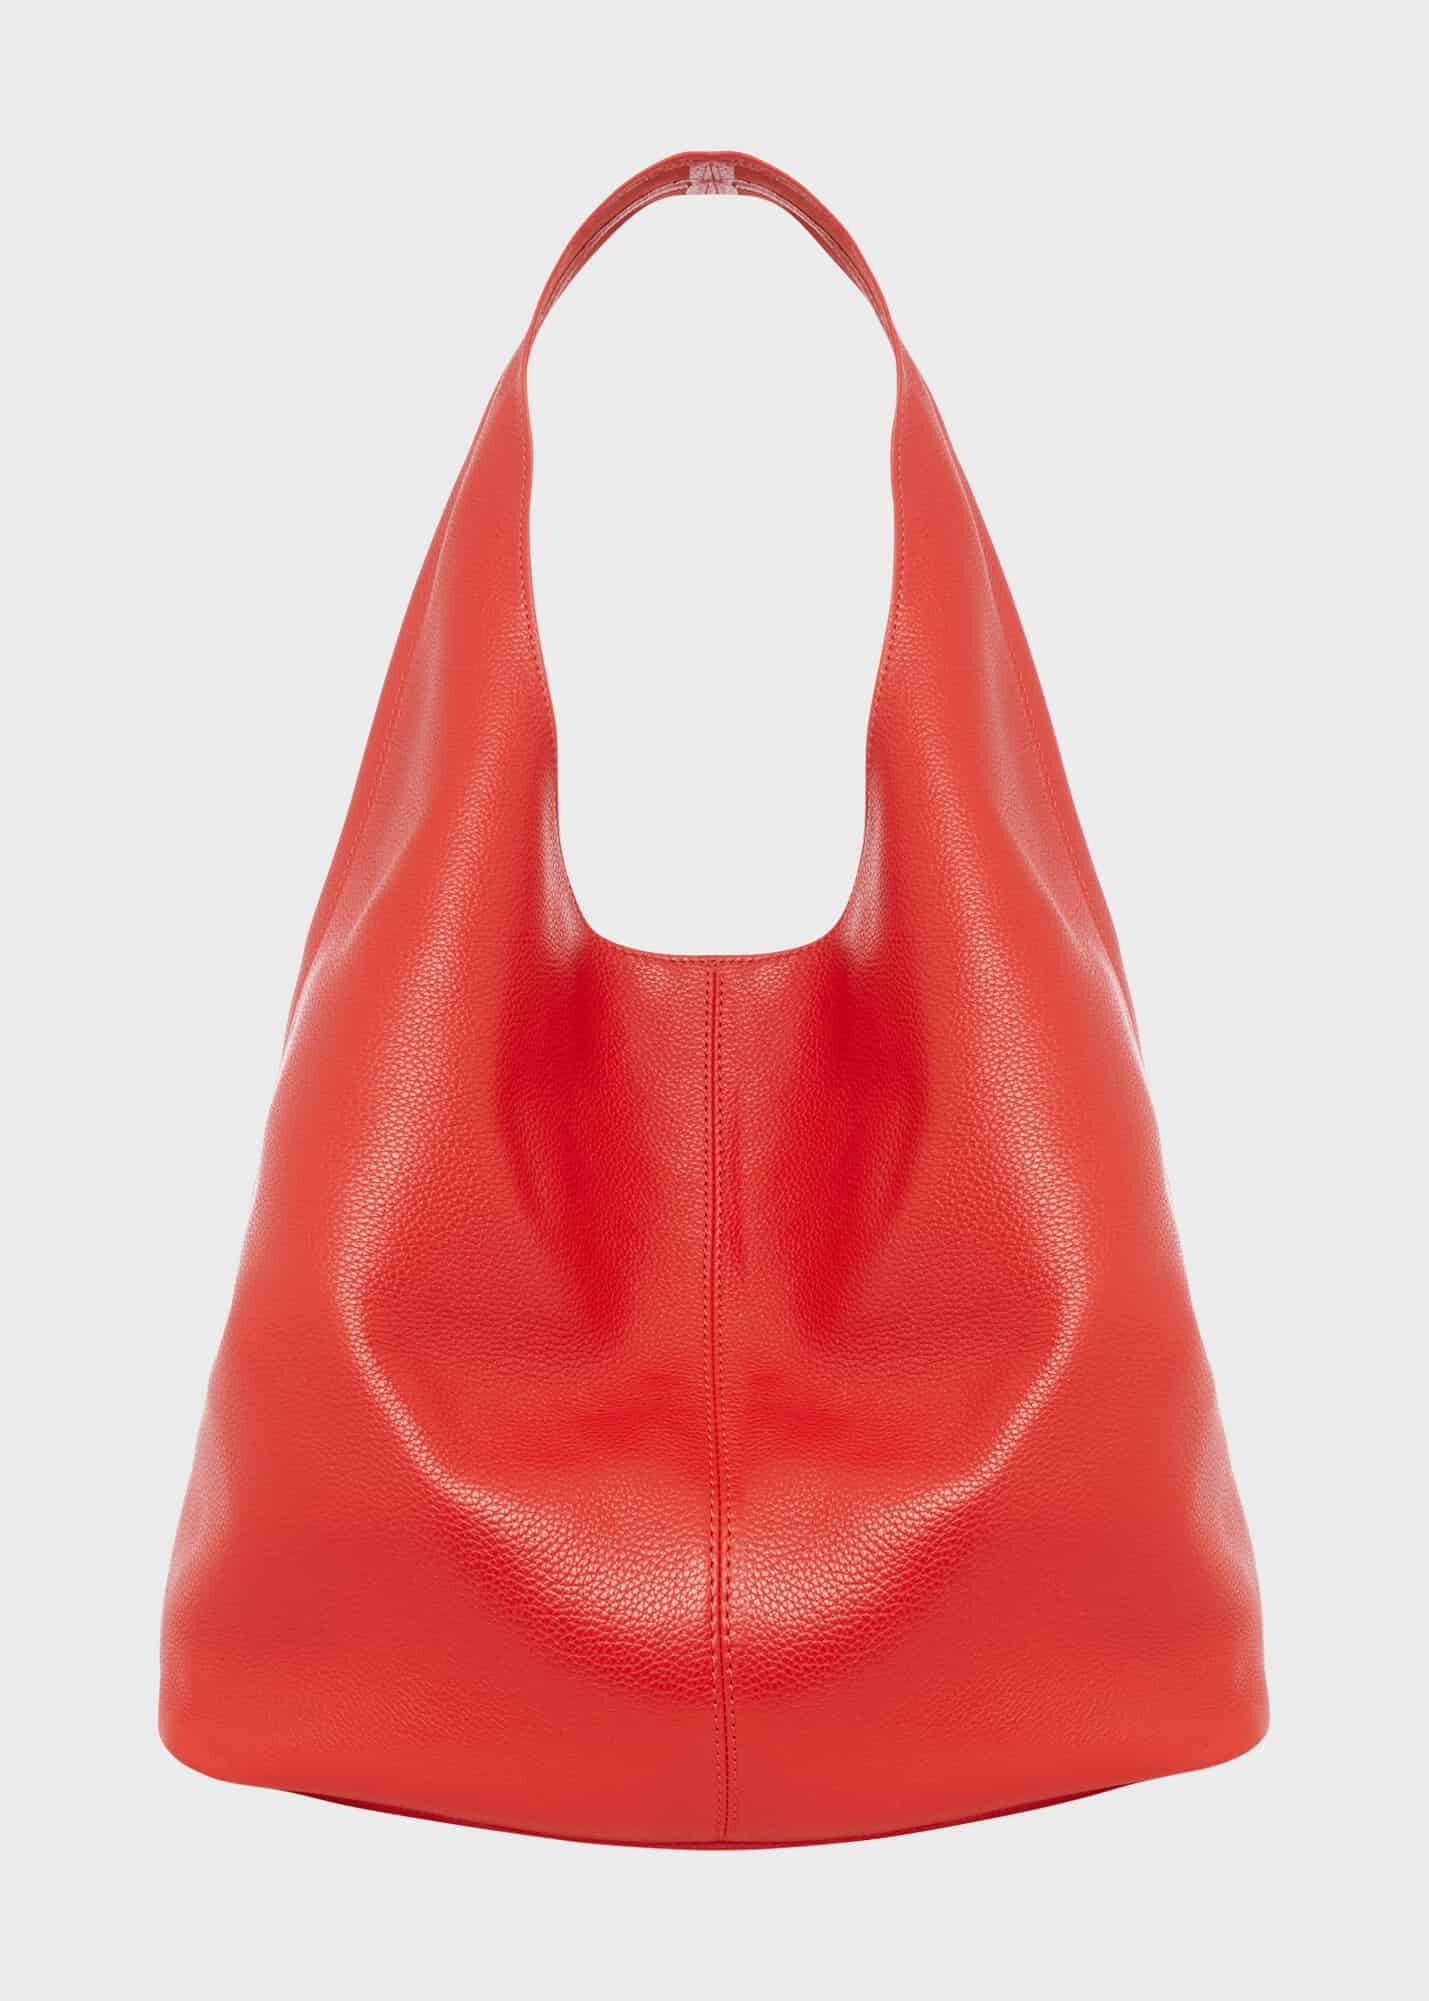 Sale Bags & Accessories | Handbags, Clutches & Purses | Hobbs London |